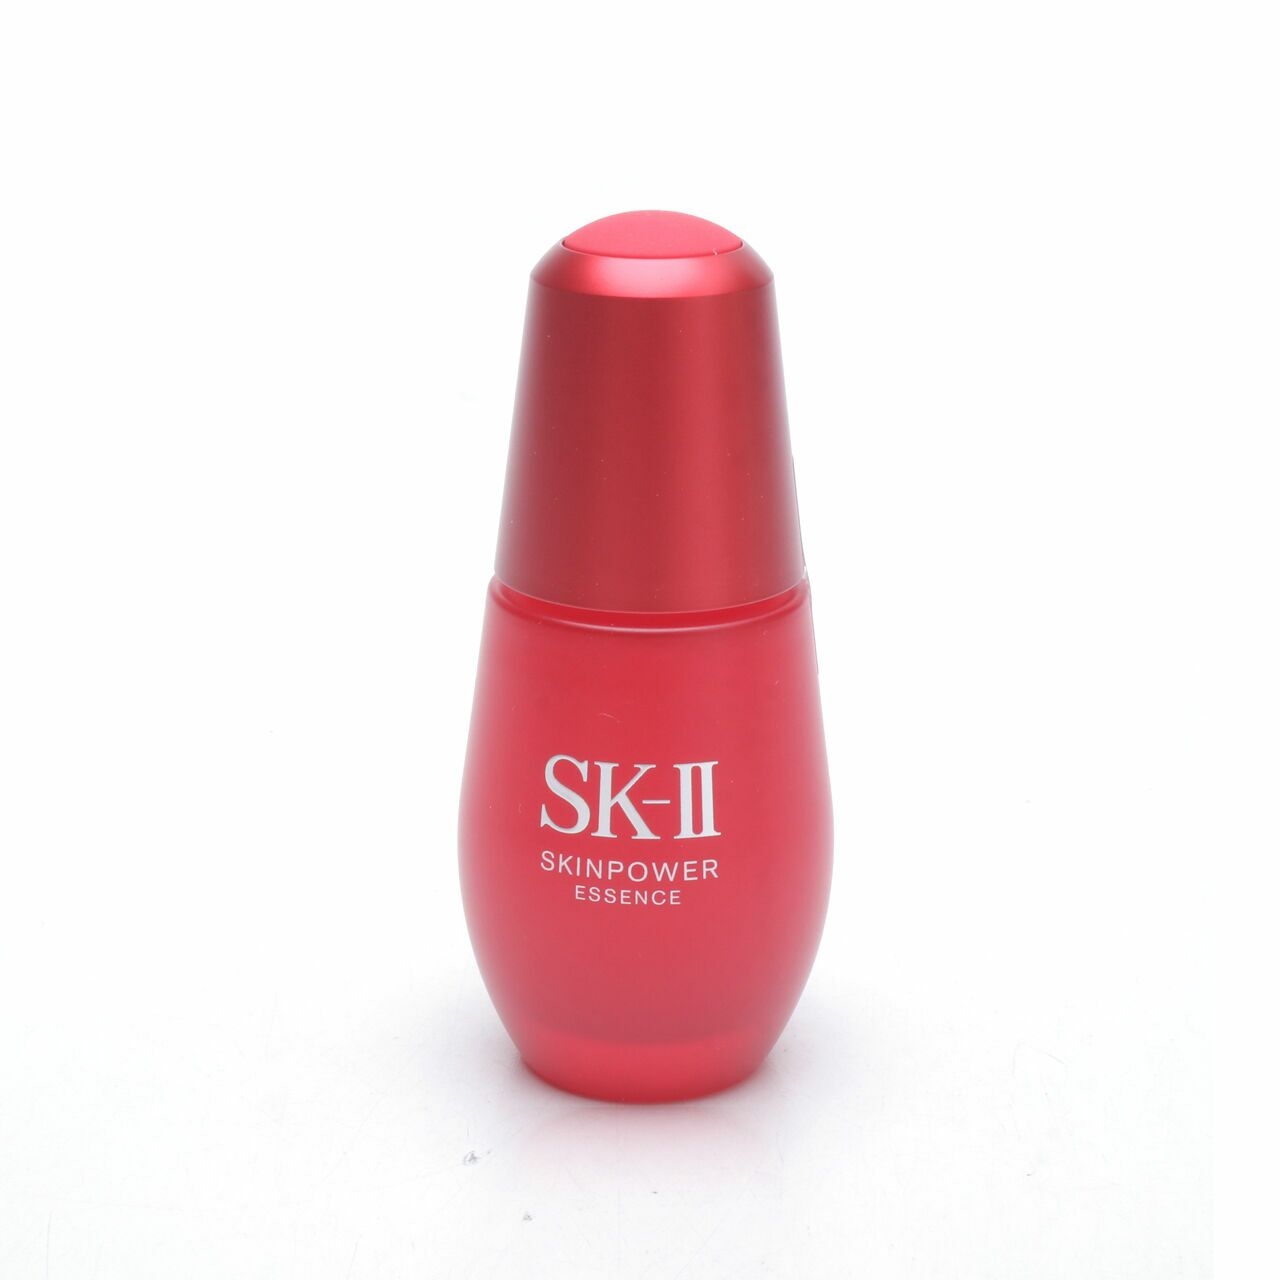 SK-II Skinpower Essence Skin Care